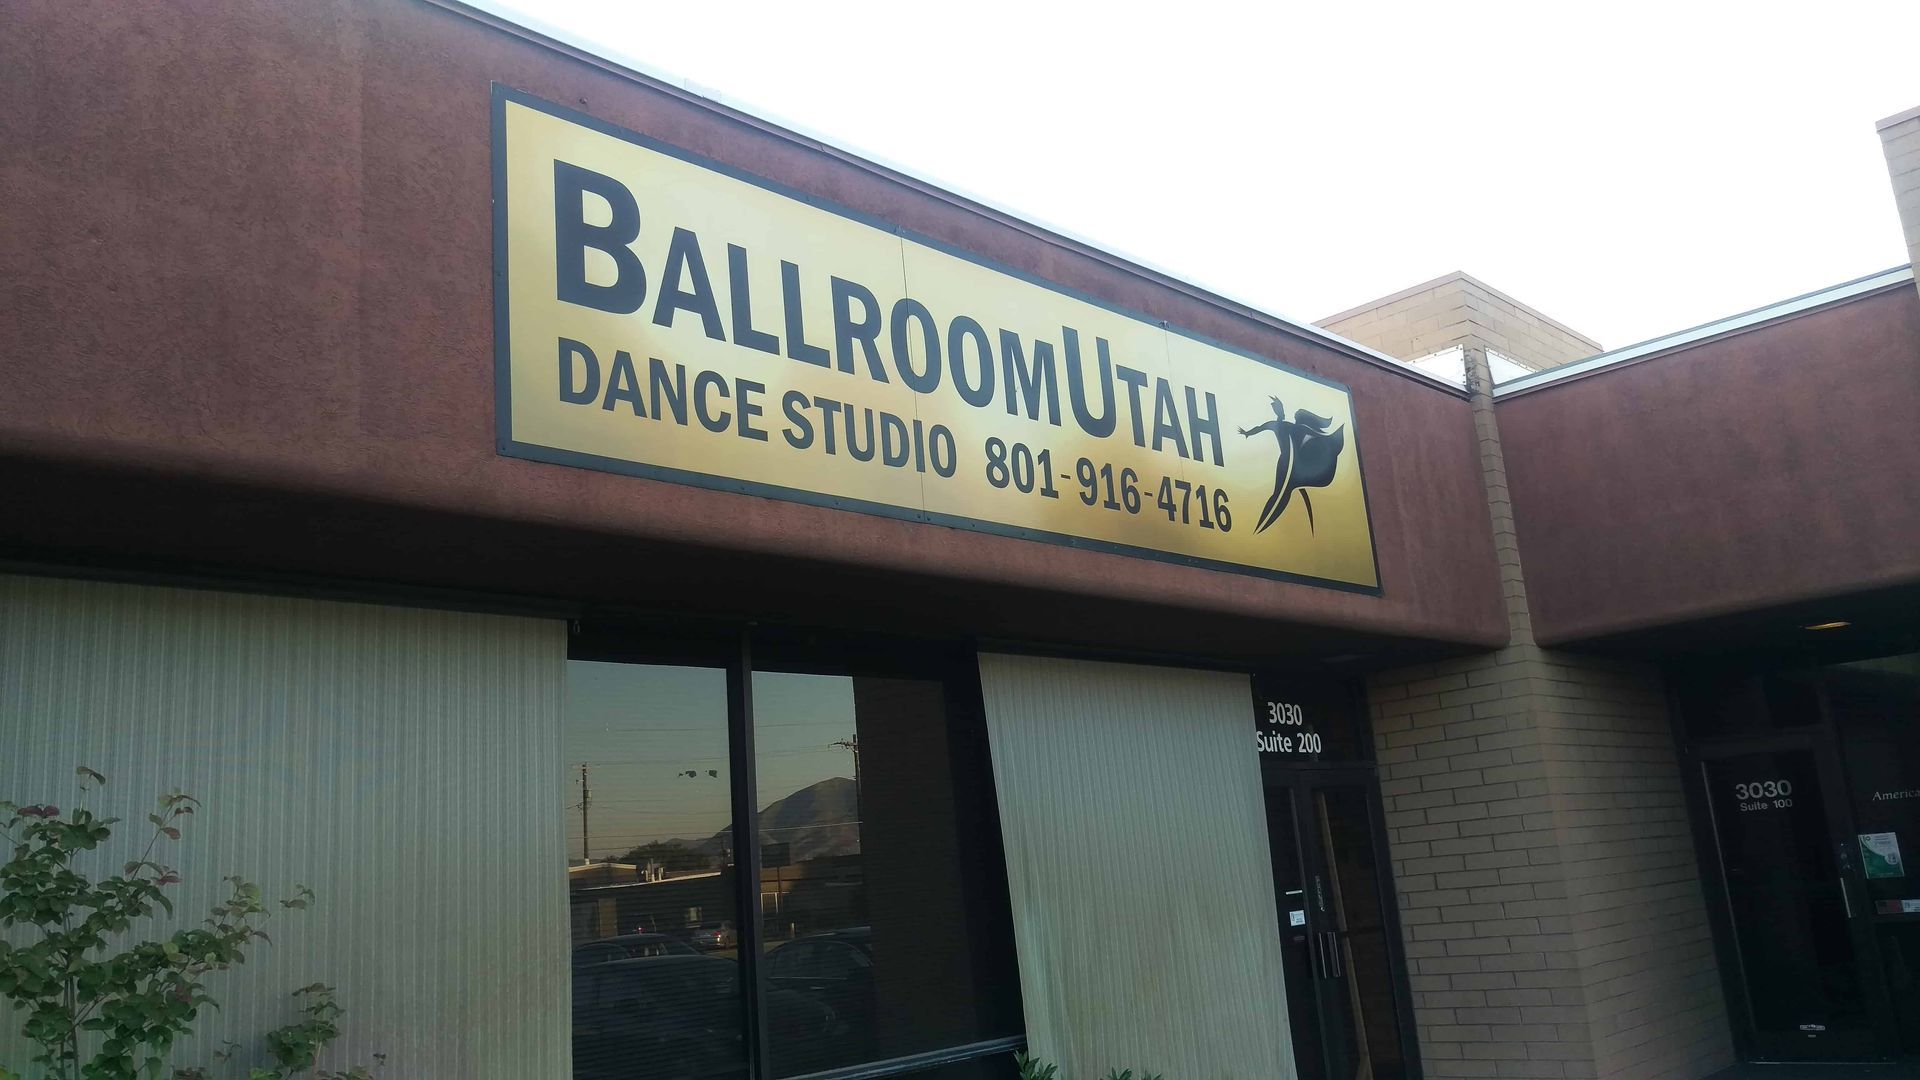 BallroomUtah Dance Studio storefront